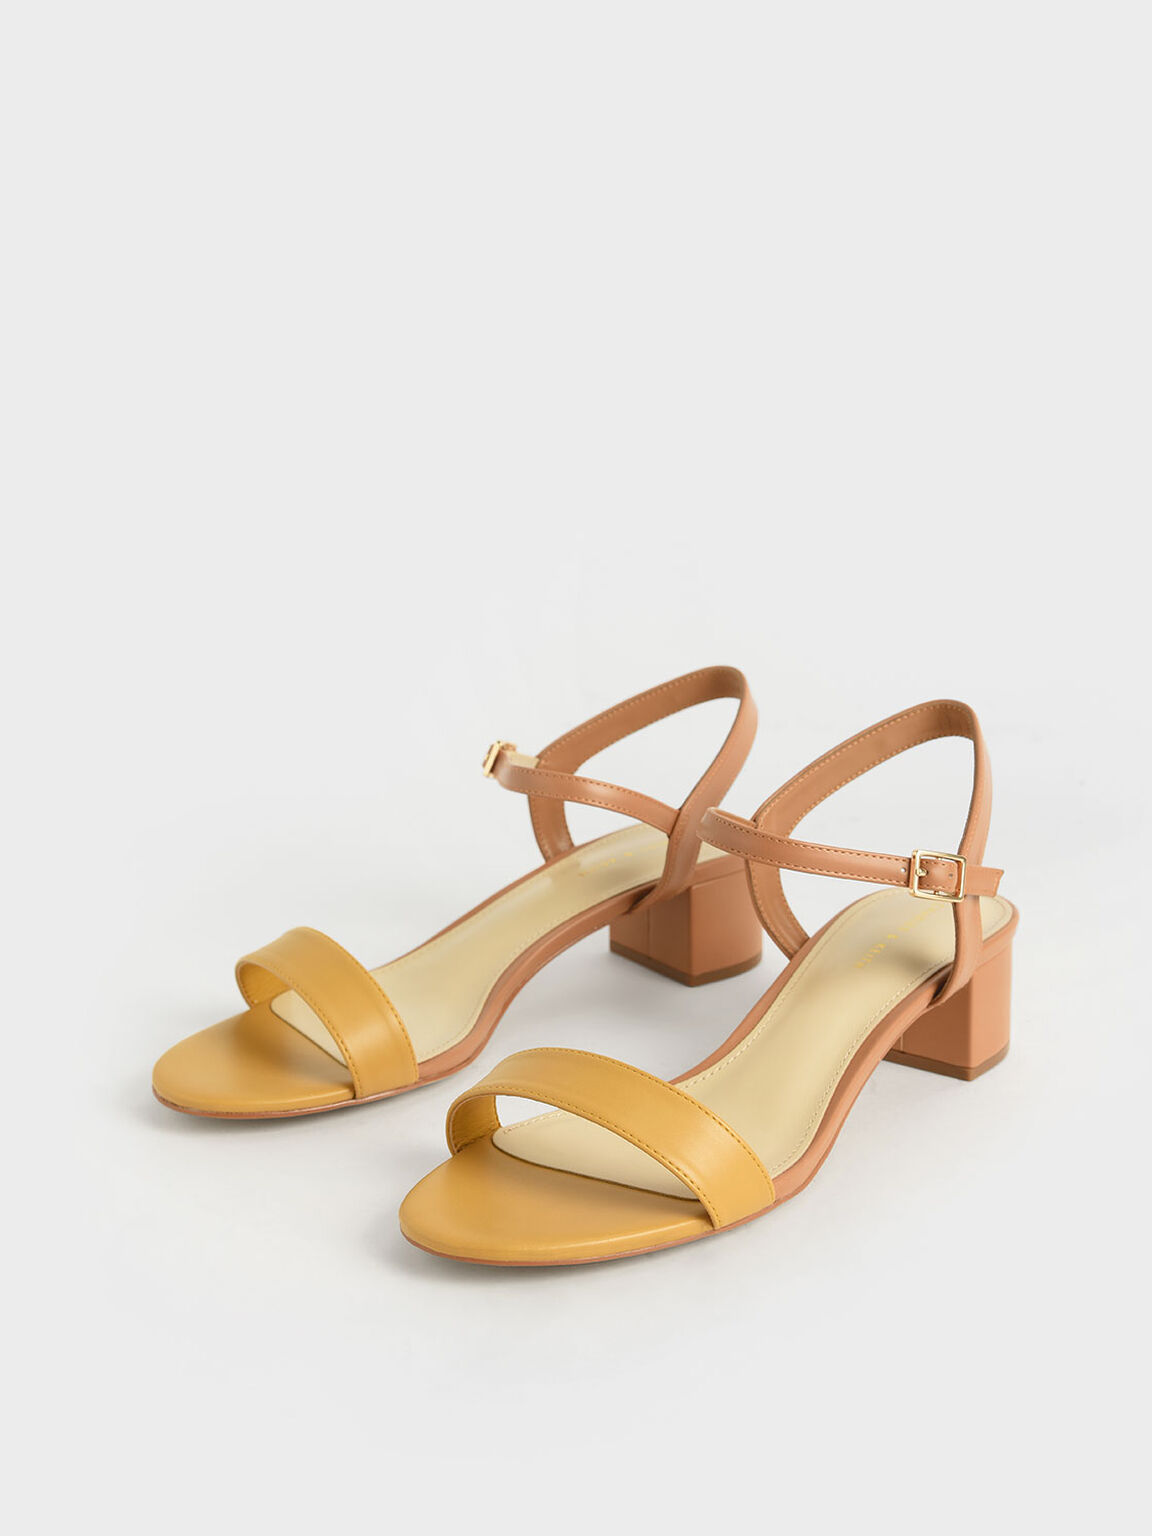 Sandal Two-Tone Open-Toe, Yellow, hi-res